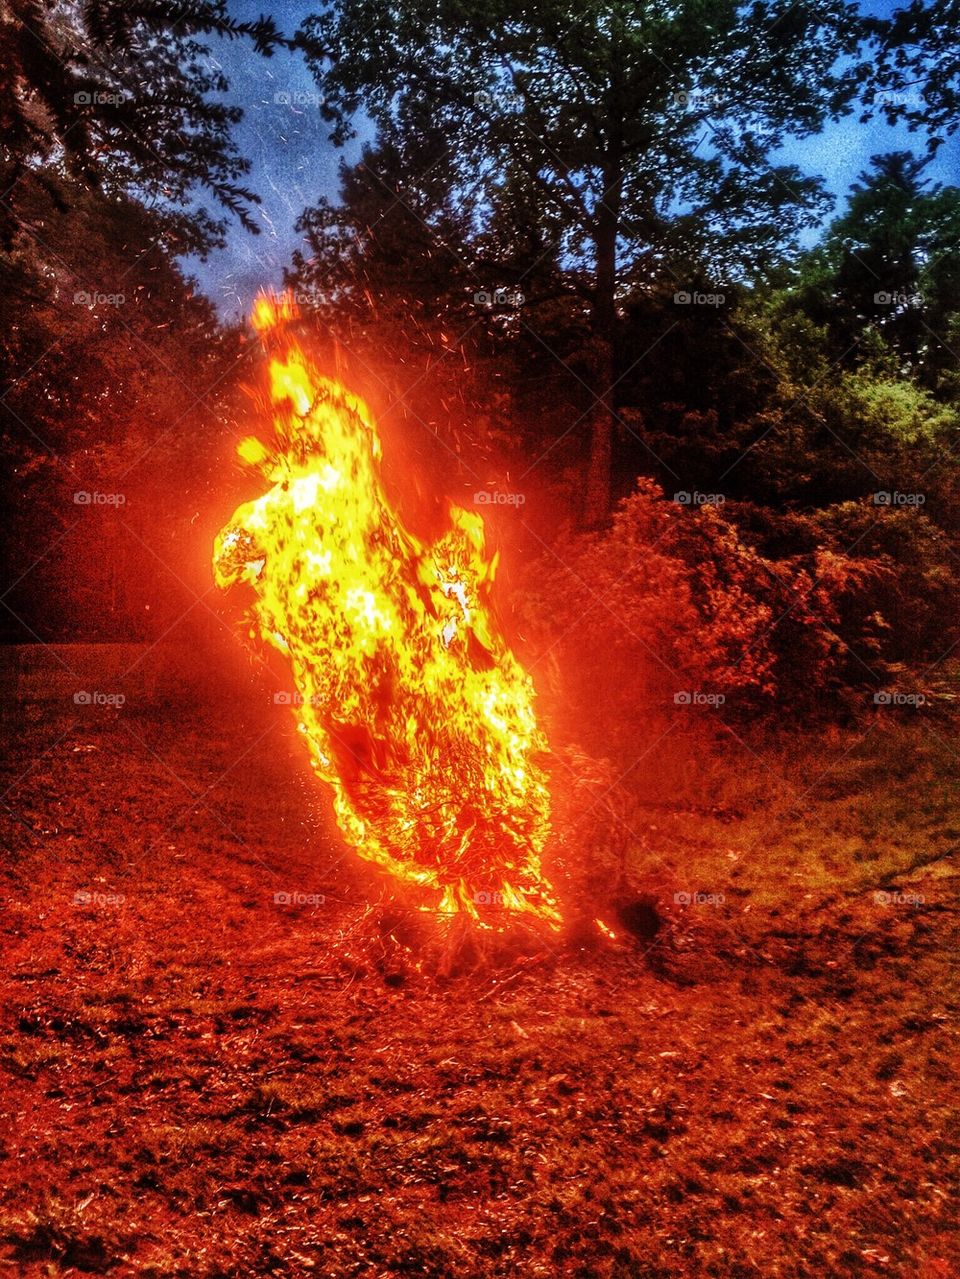 Bonfire in the fall